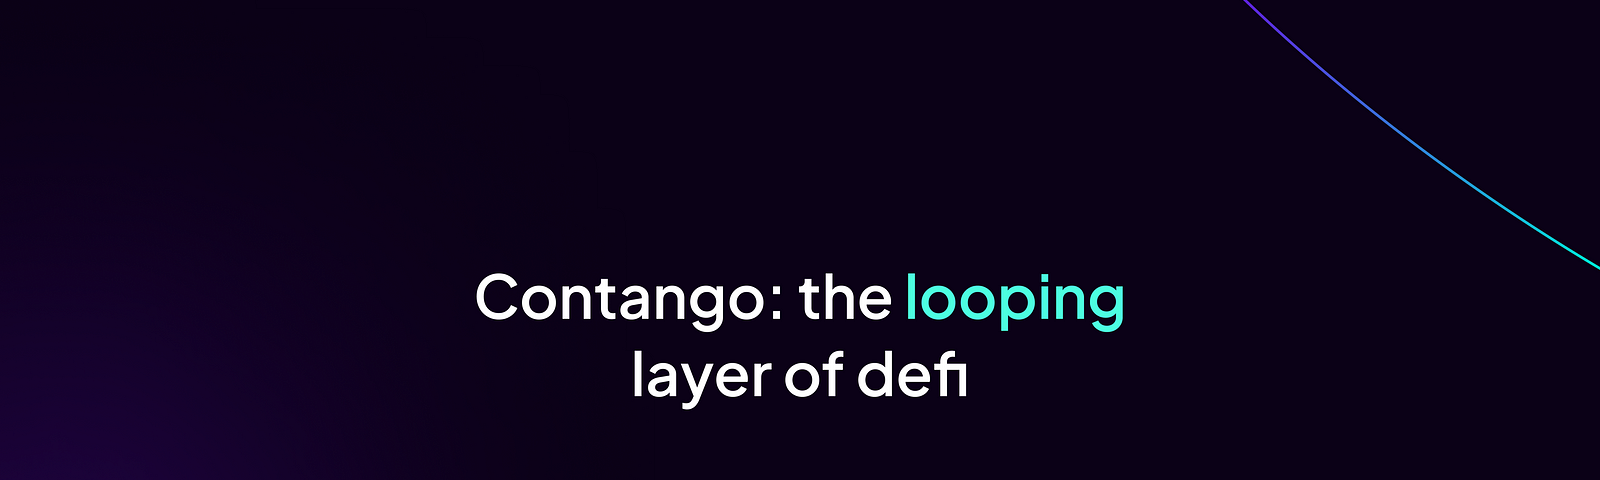 Contango: the looping layer of defi